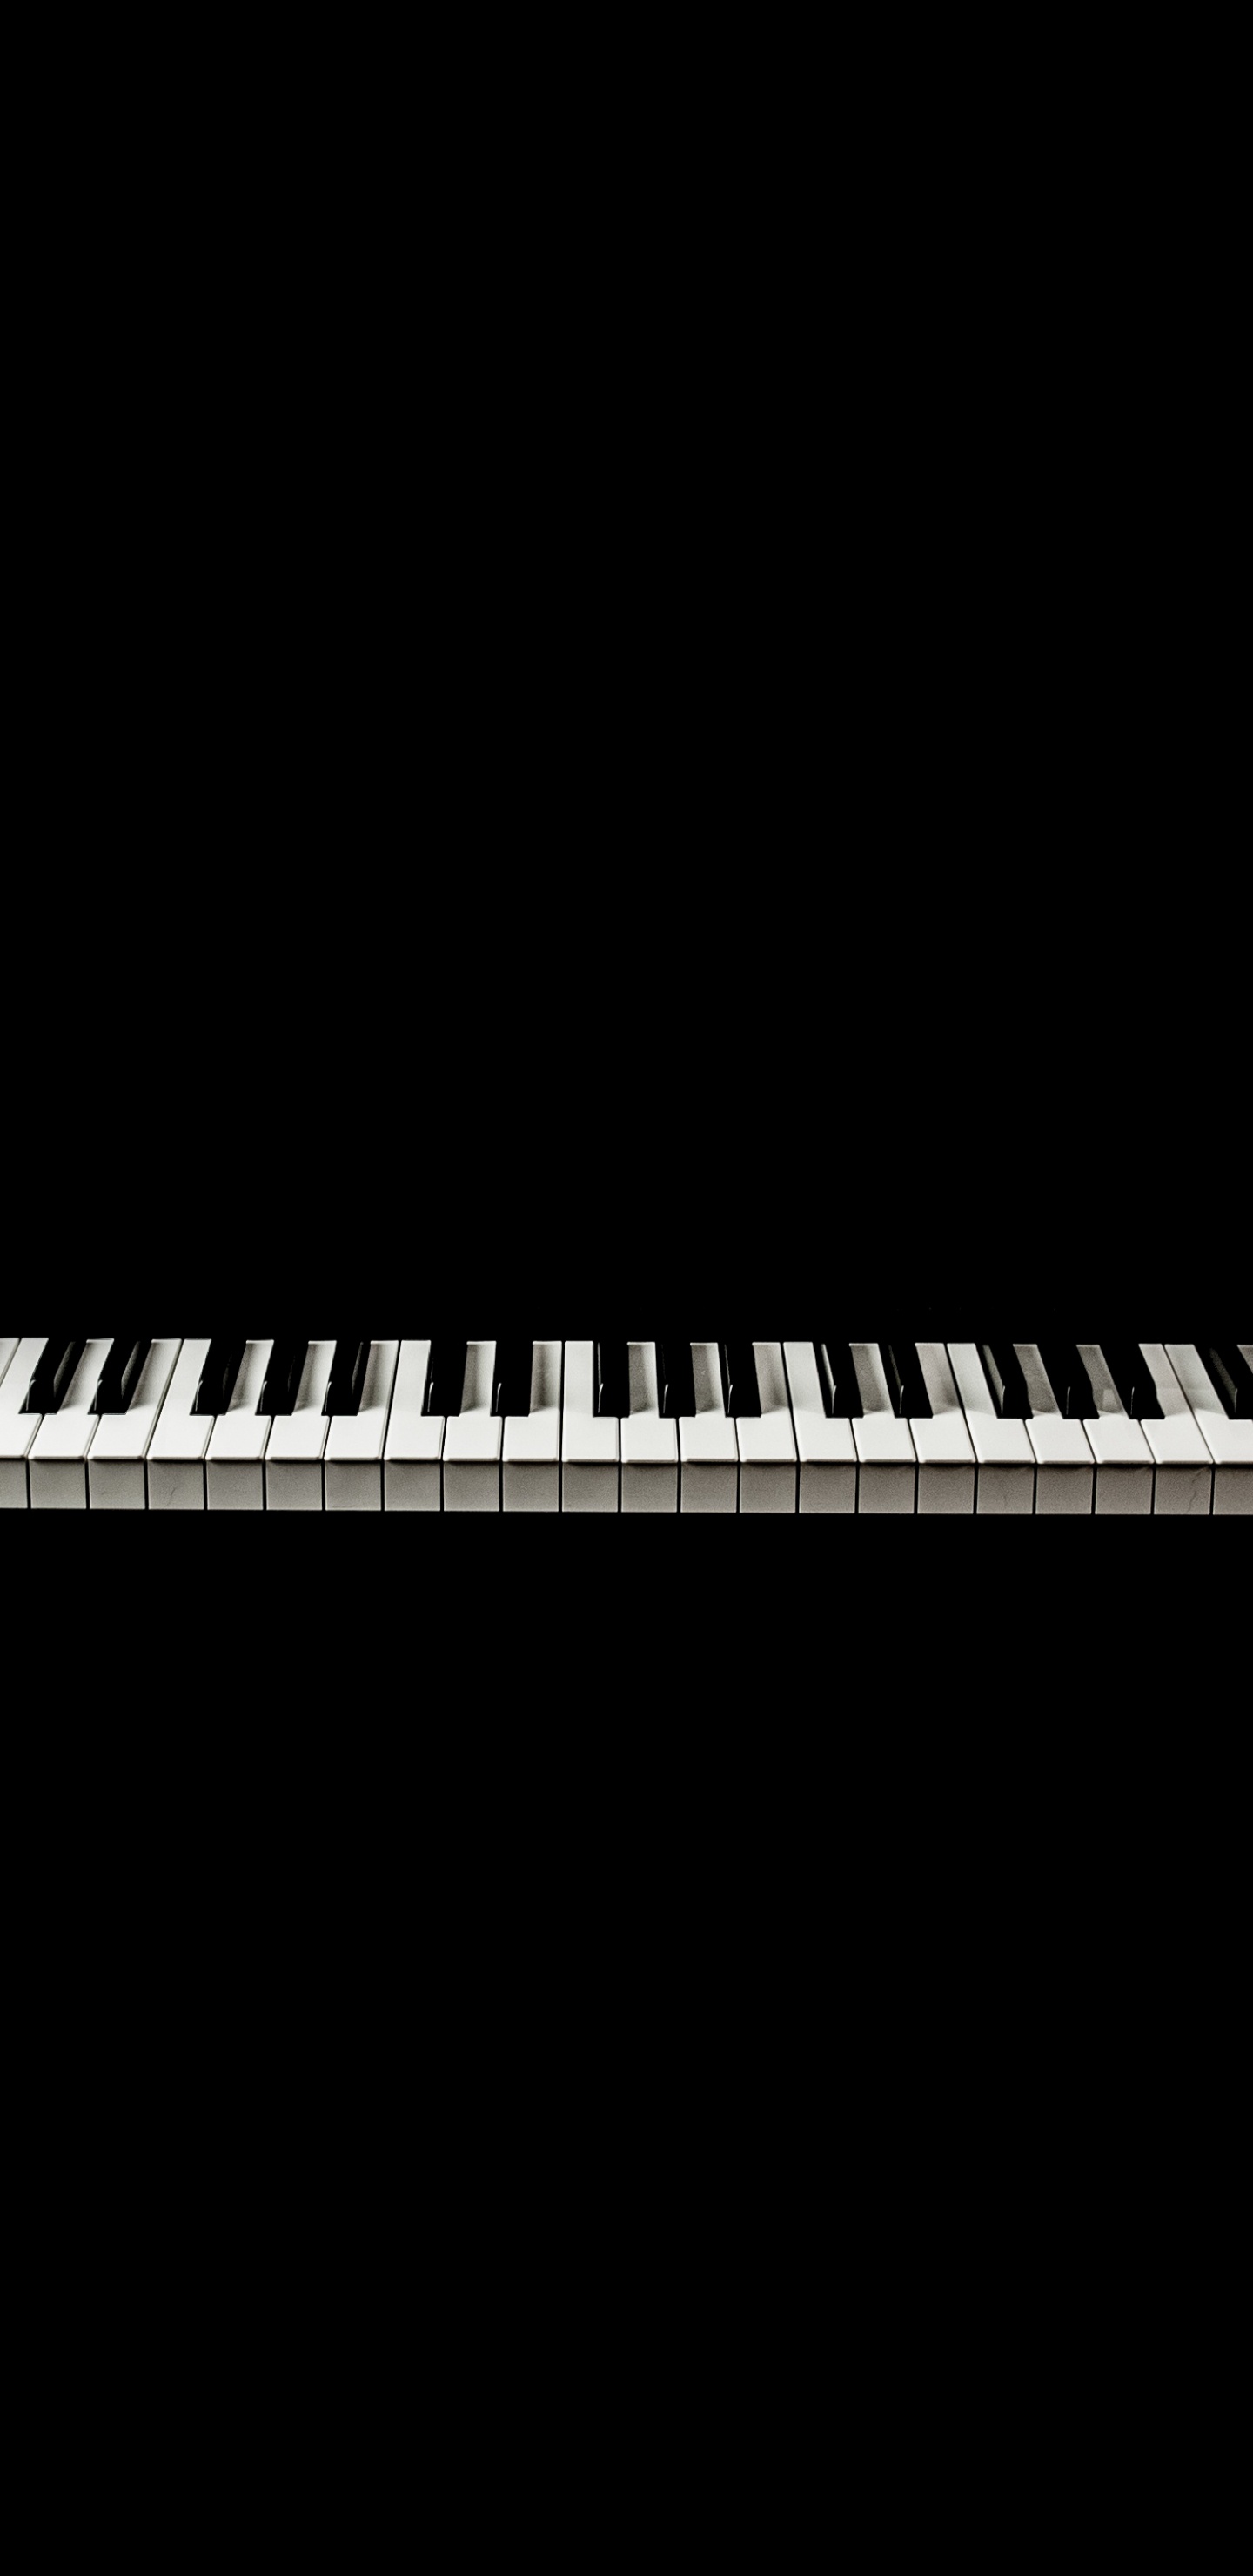 Musical Keyboard, Digital Piano, Electric Piano, Piano, Keyboard. Wallpaper in 1440x2960 Resolution